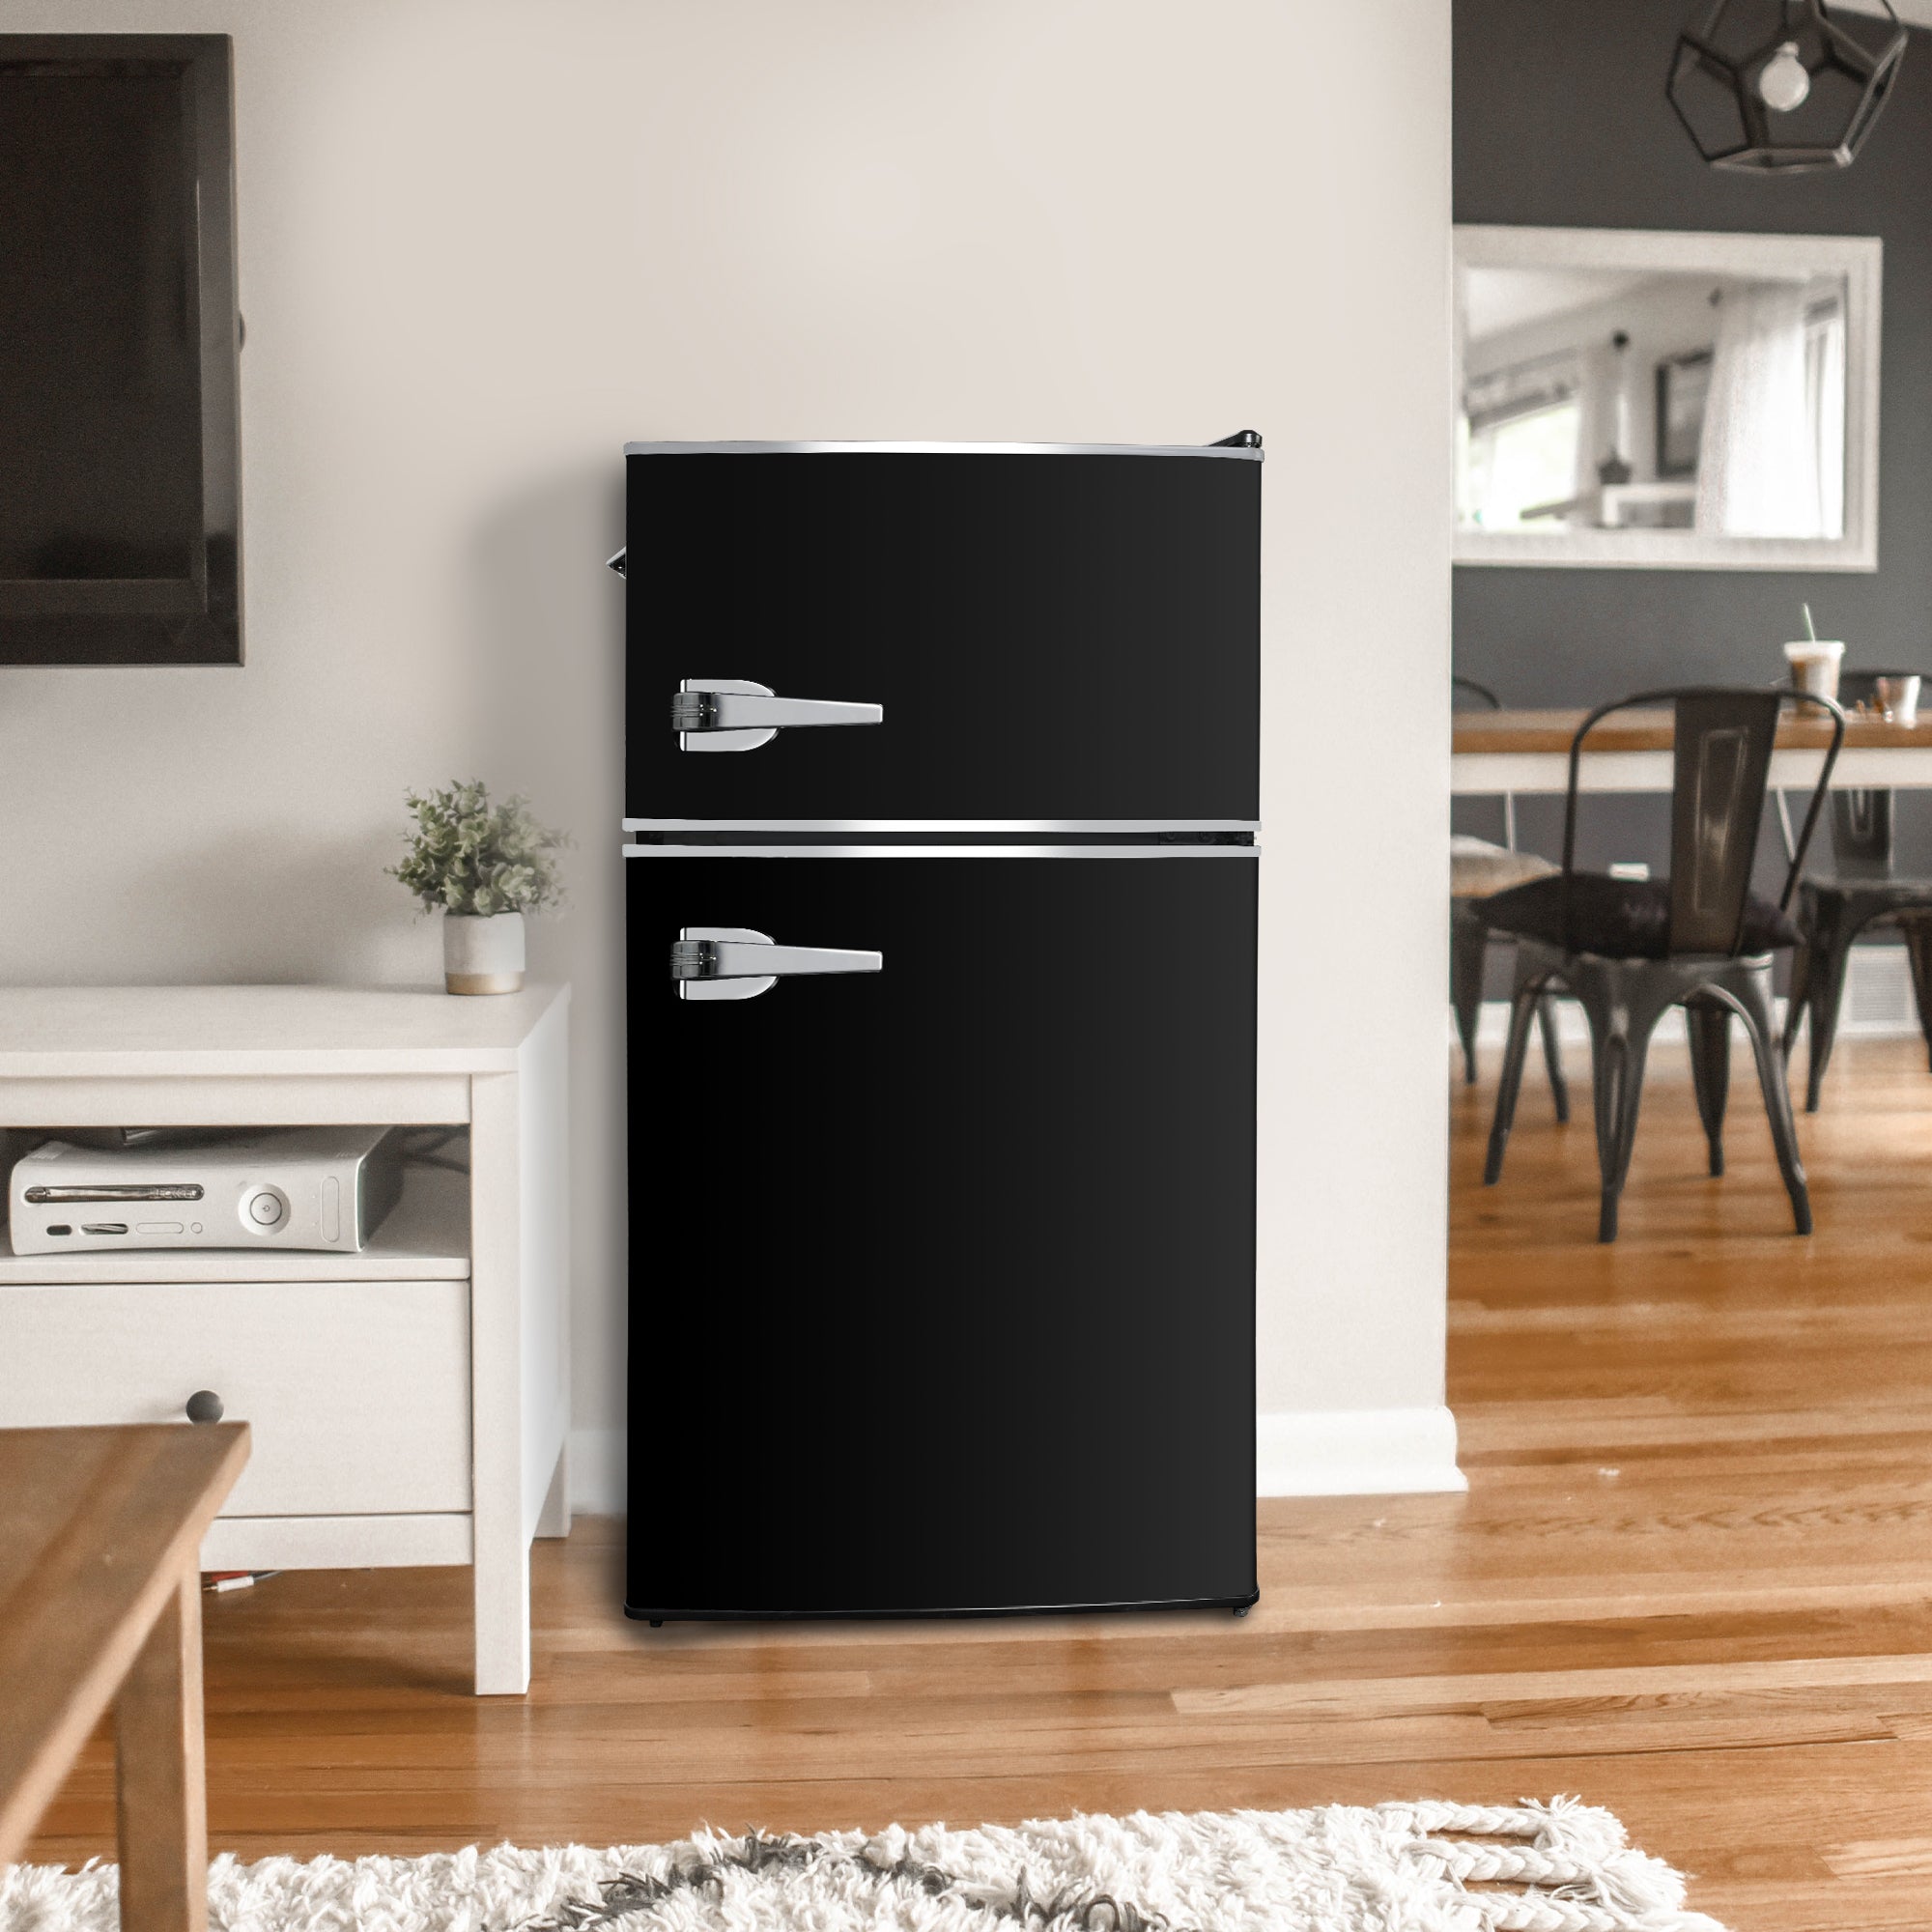 Luckyermore 3.2 Cu.Ft. 2-Door Fridge with Freezer Compact Refrigerator with Glass Shelves